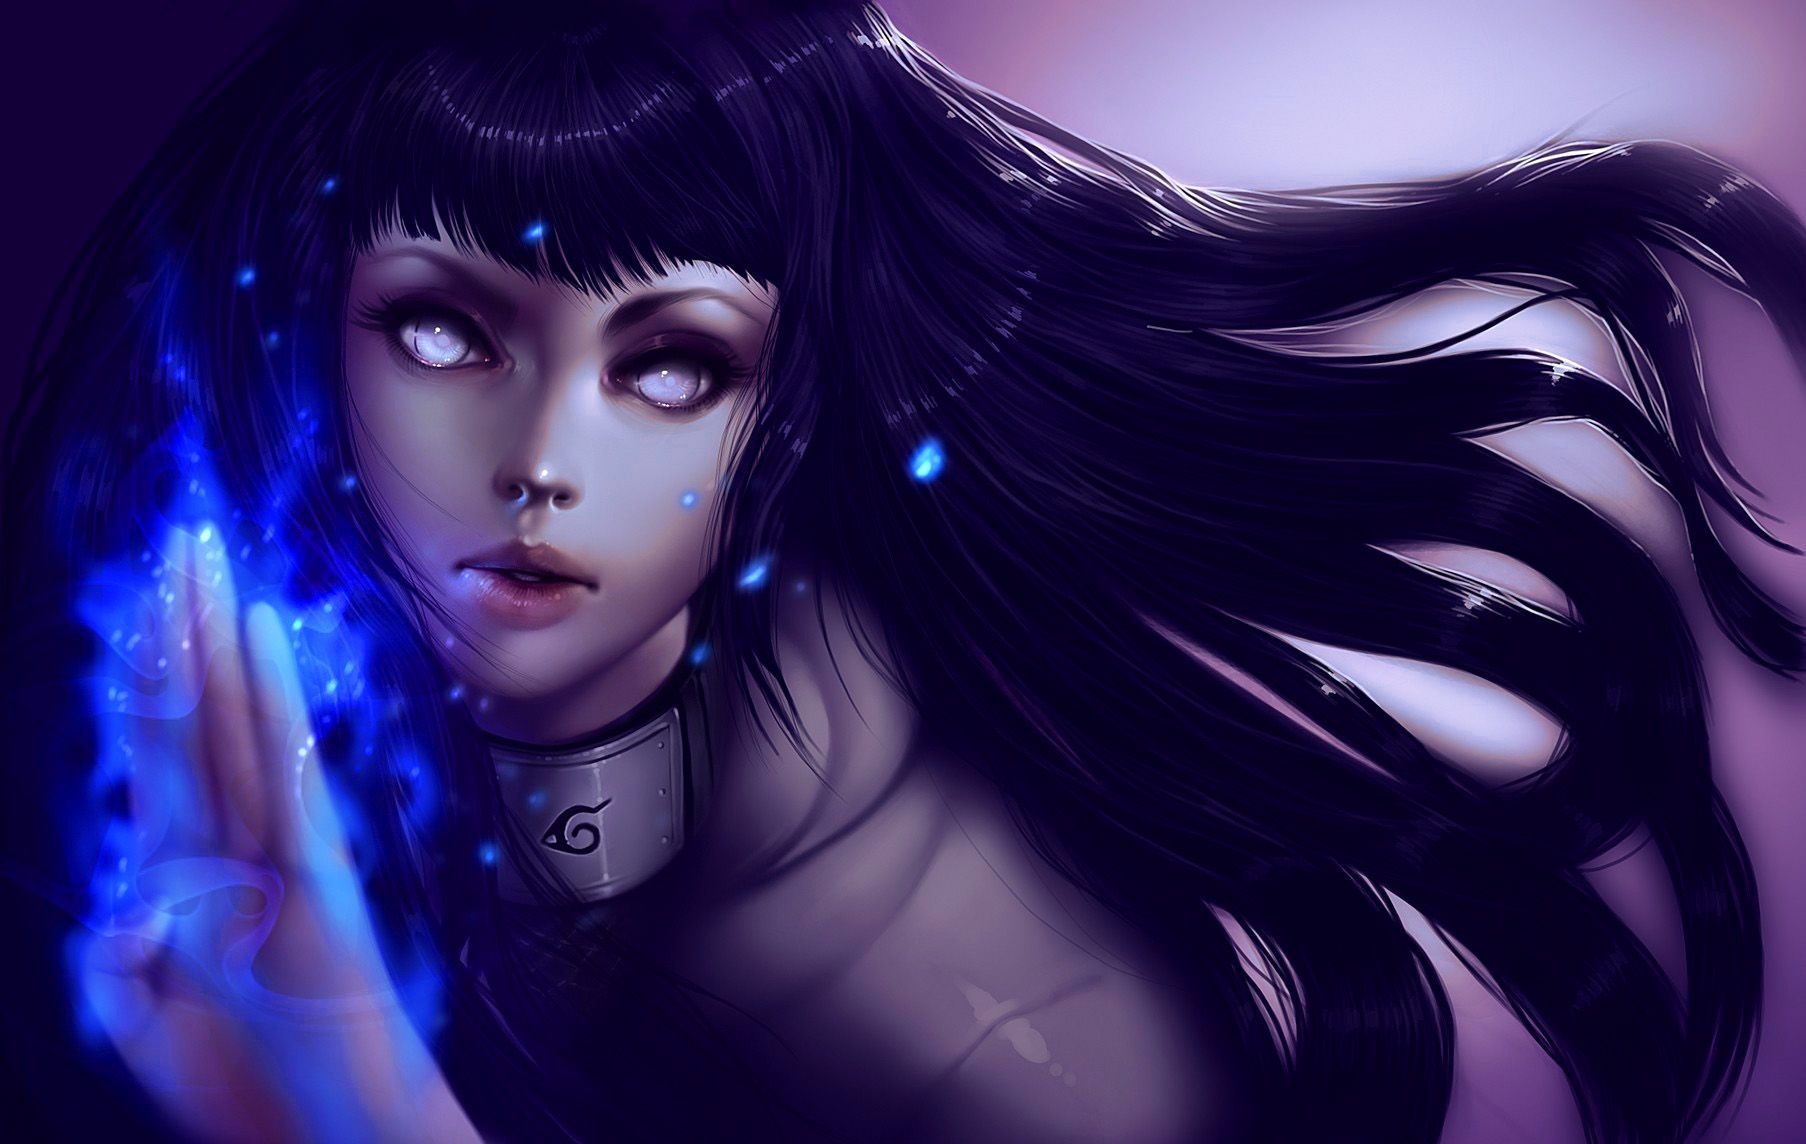 Anime sci fi futuristic cyborg robot android tech mech girl eyes dark glow art wallpaperx1144